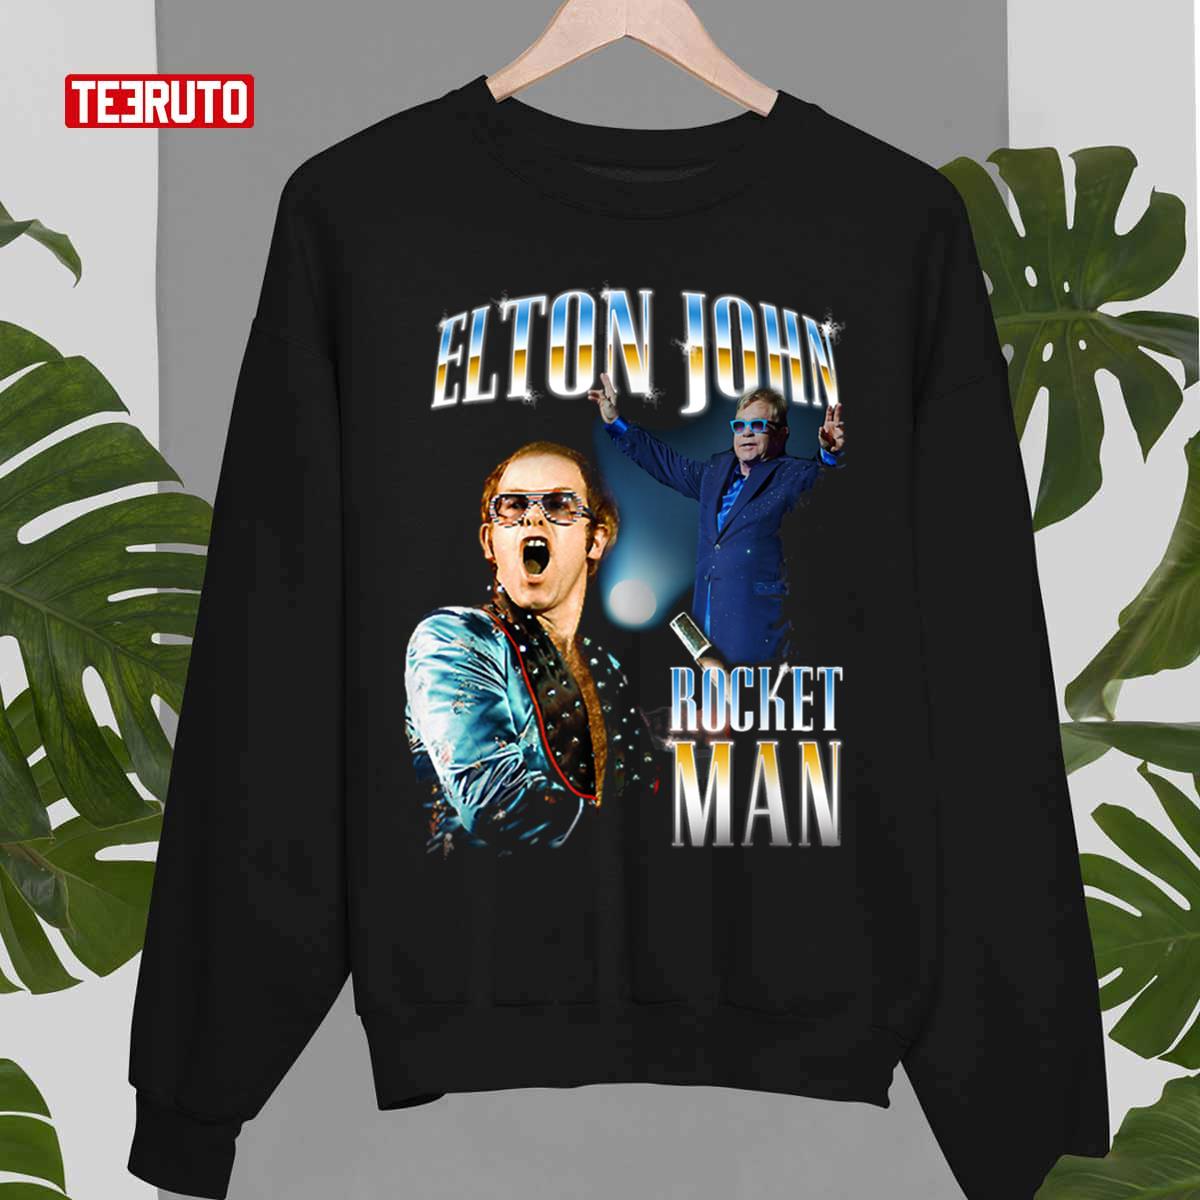 Singer Elton John Music Fan Gift Classic Rock Men's Shirt Women's Shirt Retro Rocket 70s Music Rocket Man Comfortable Unisex T-Shirt